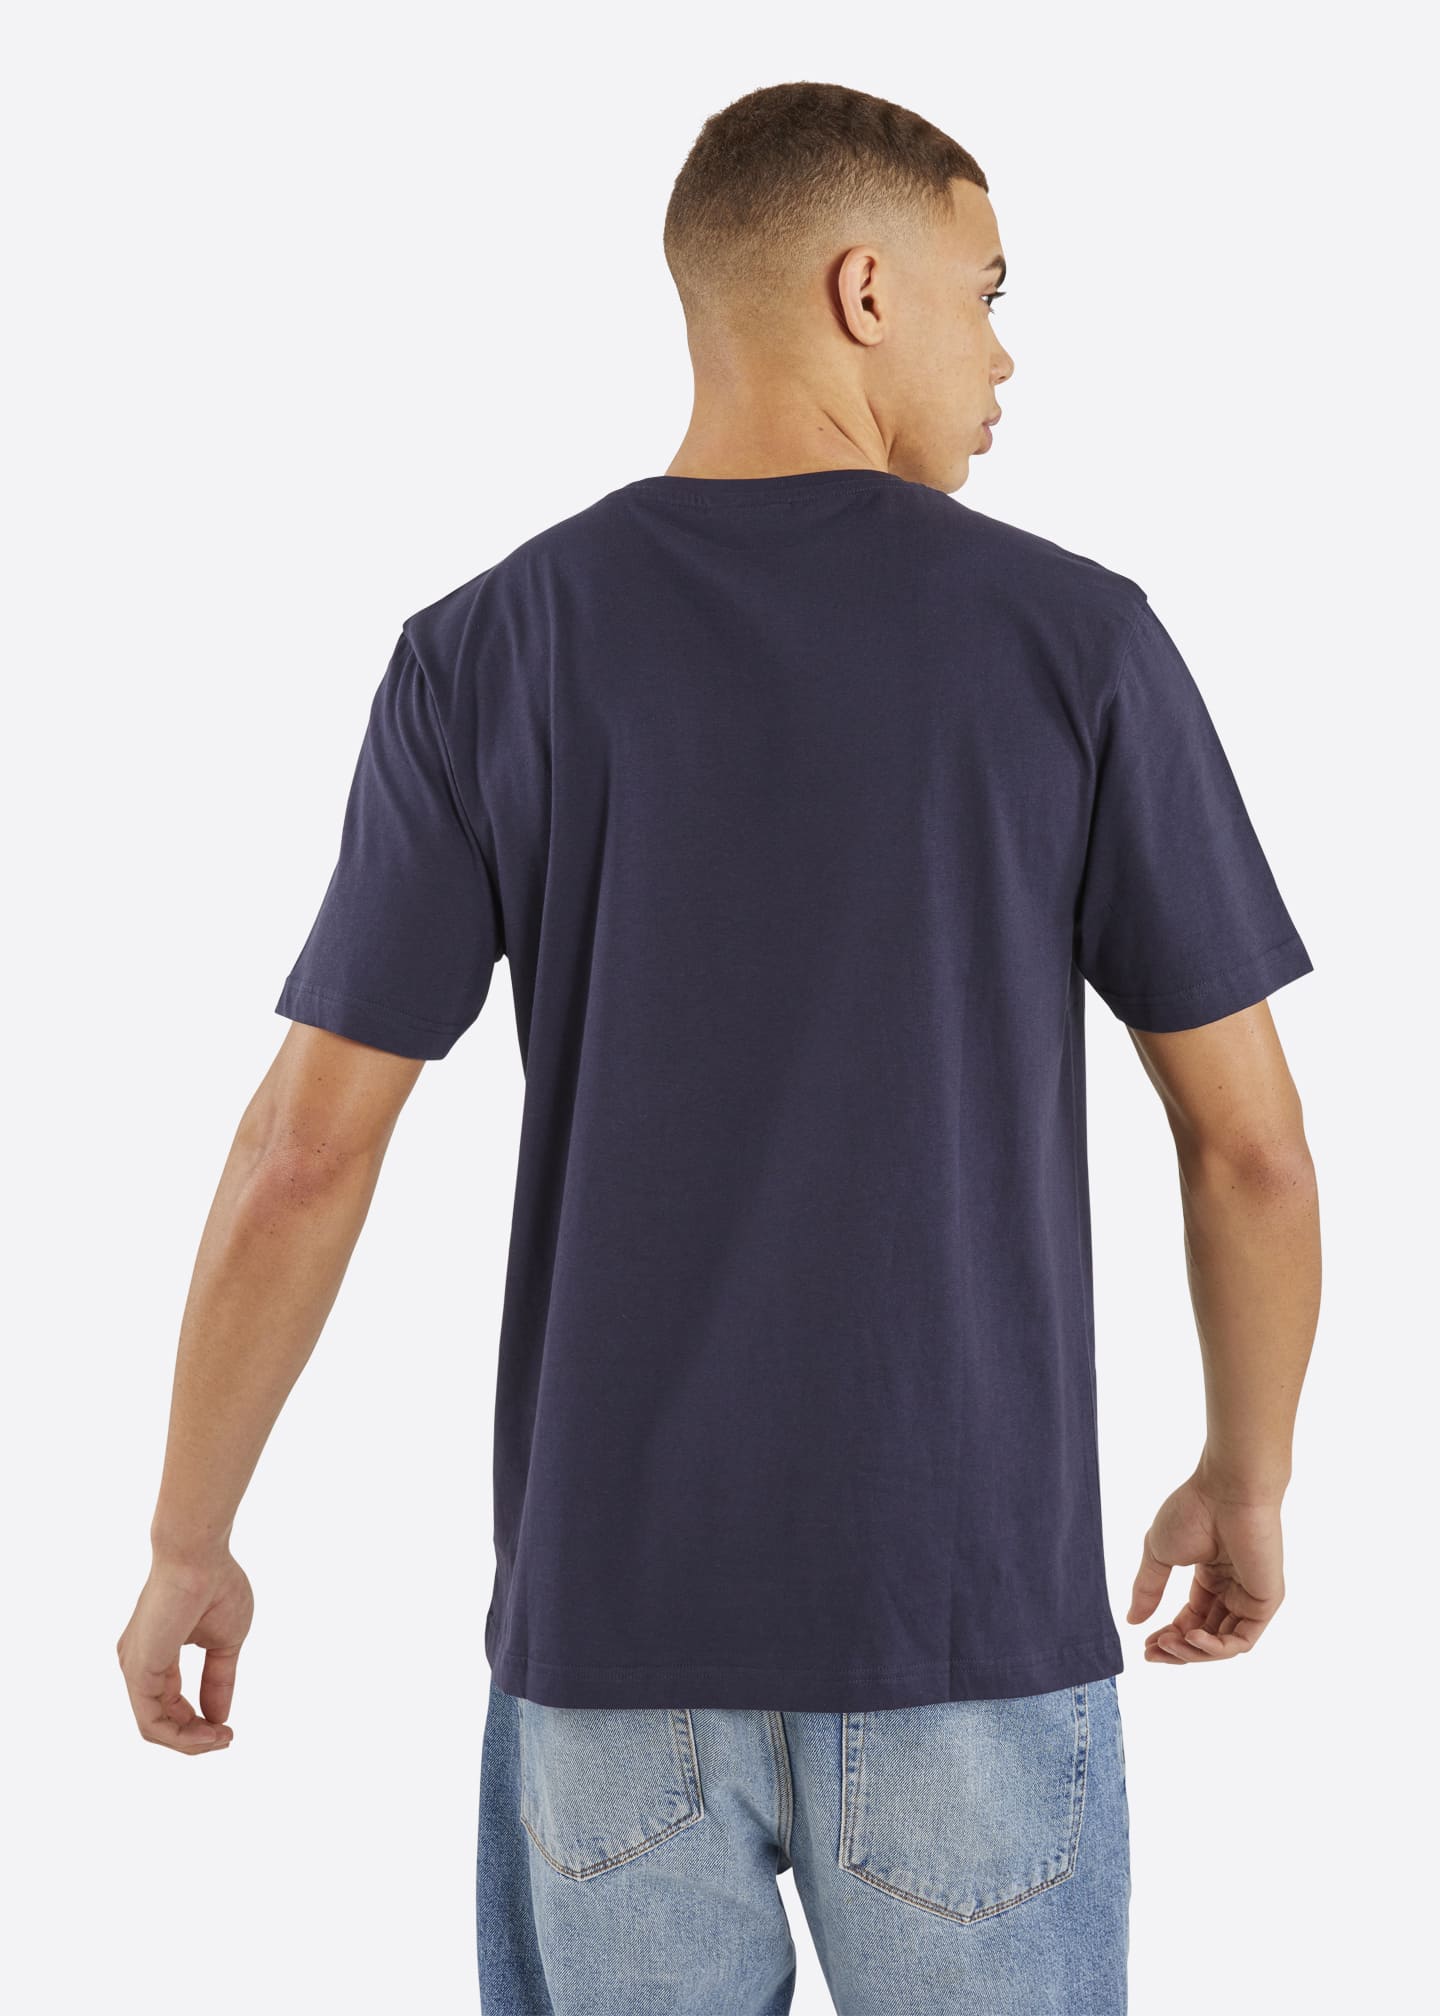 Spencer T-Shirt